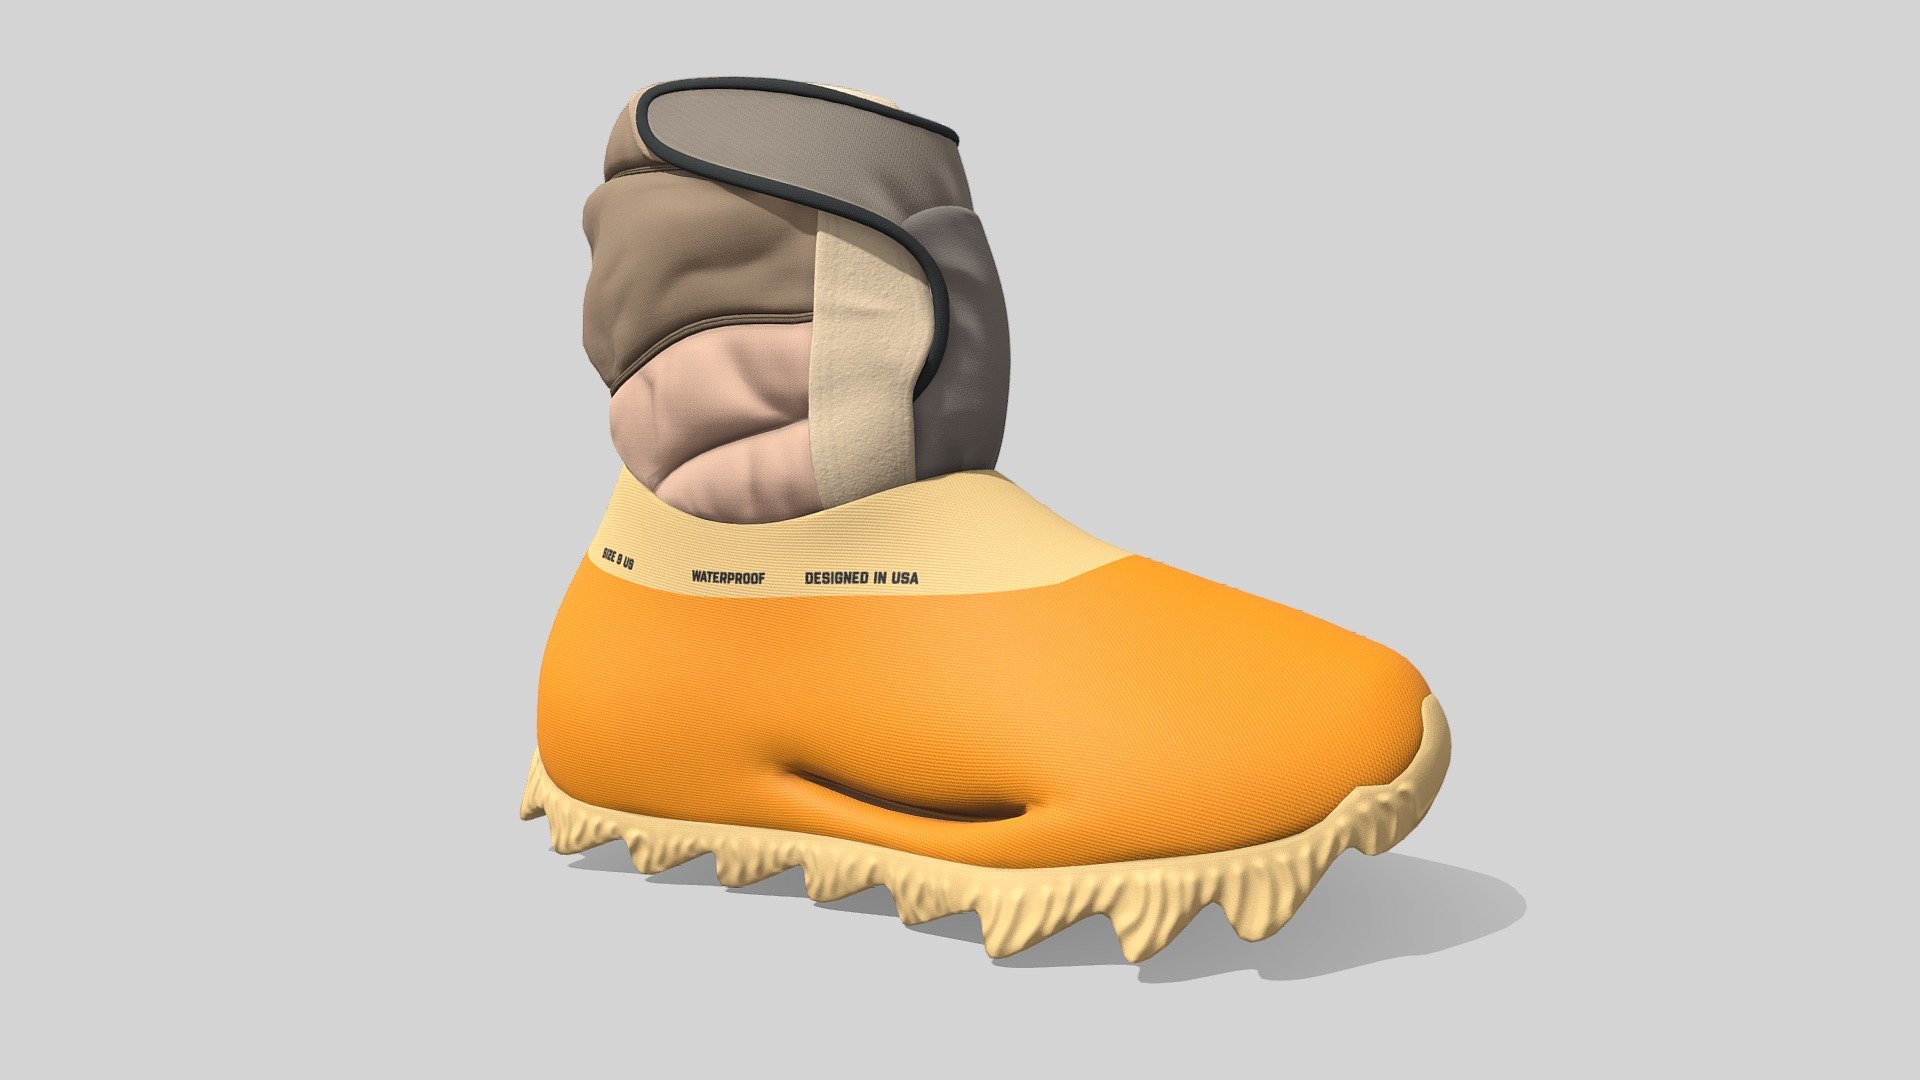 Adidas Yeezy Knit Boot Yellow
20k polygons per sneakers - Adidas Yeezy Knit Boot Yellow - 3D model by XaccaH 3d model